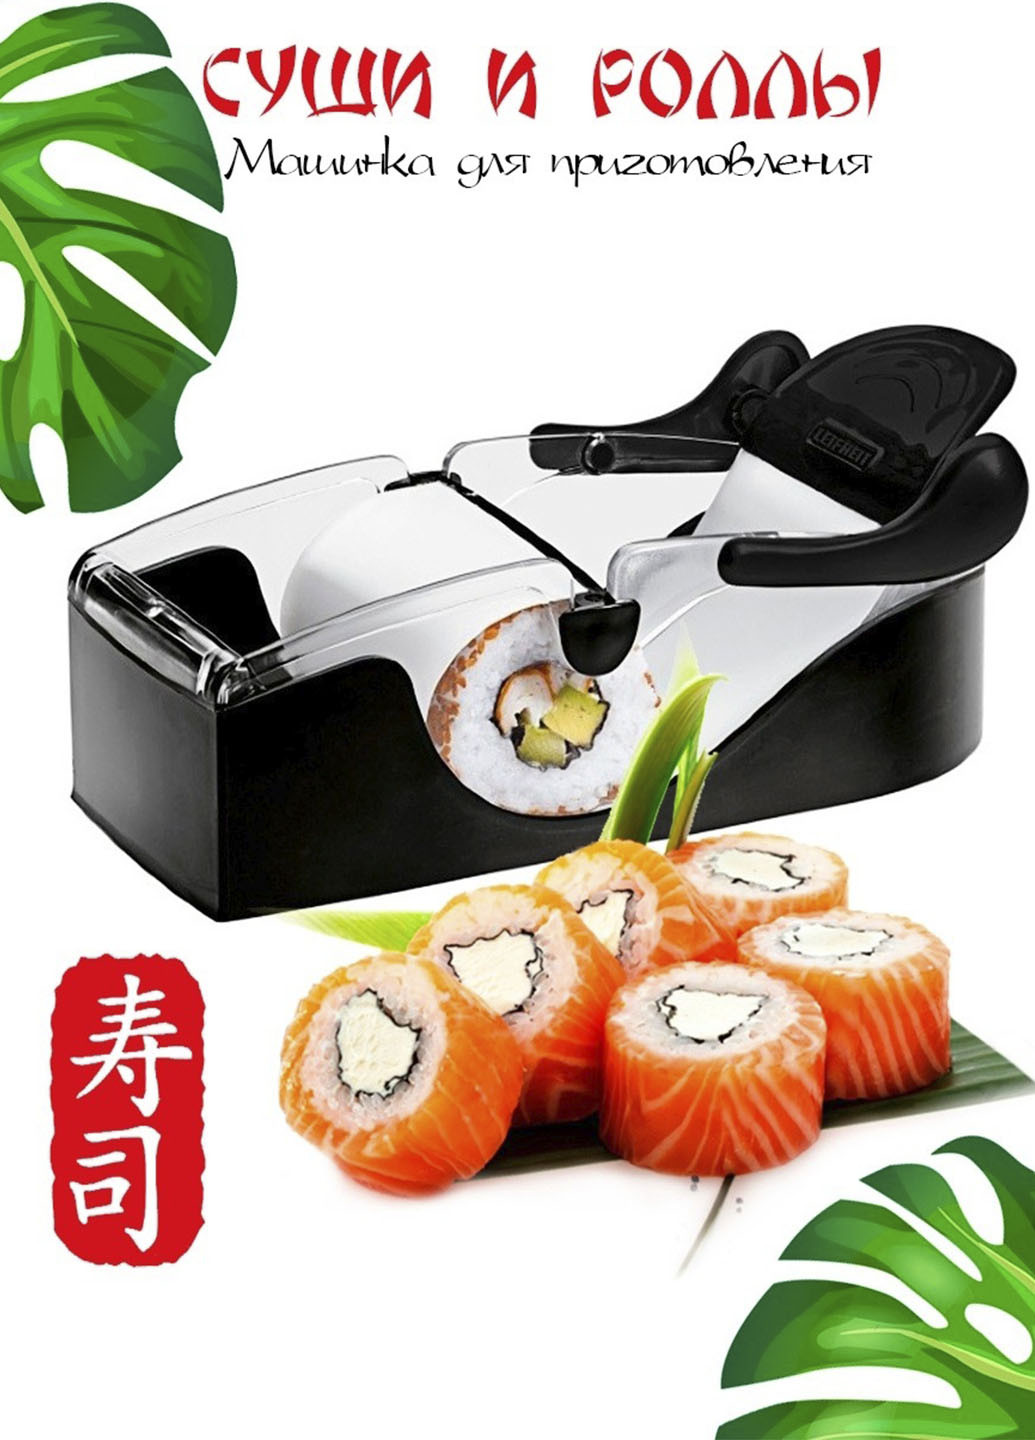 Прибор для приготовления суши и роллов Perfect Roll Sushi! машинка для закрутки суши и роллов XO (253059326)